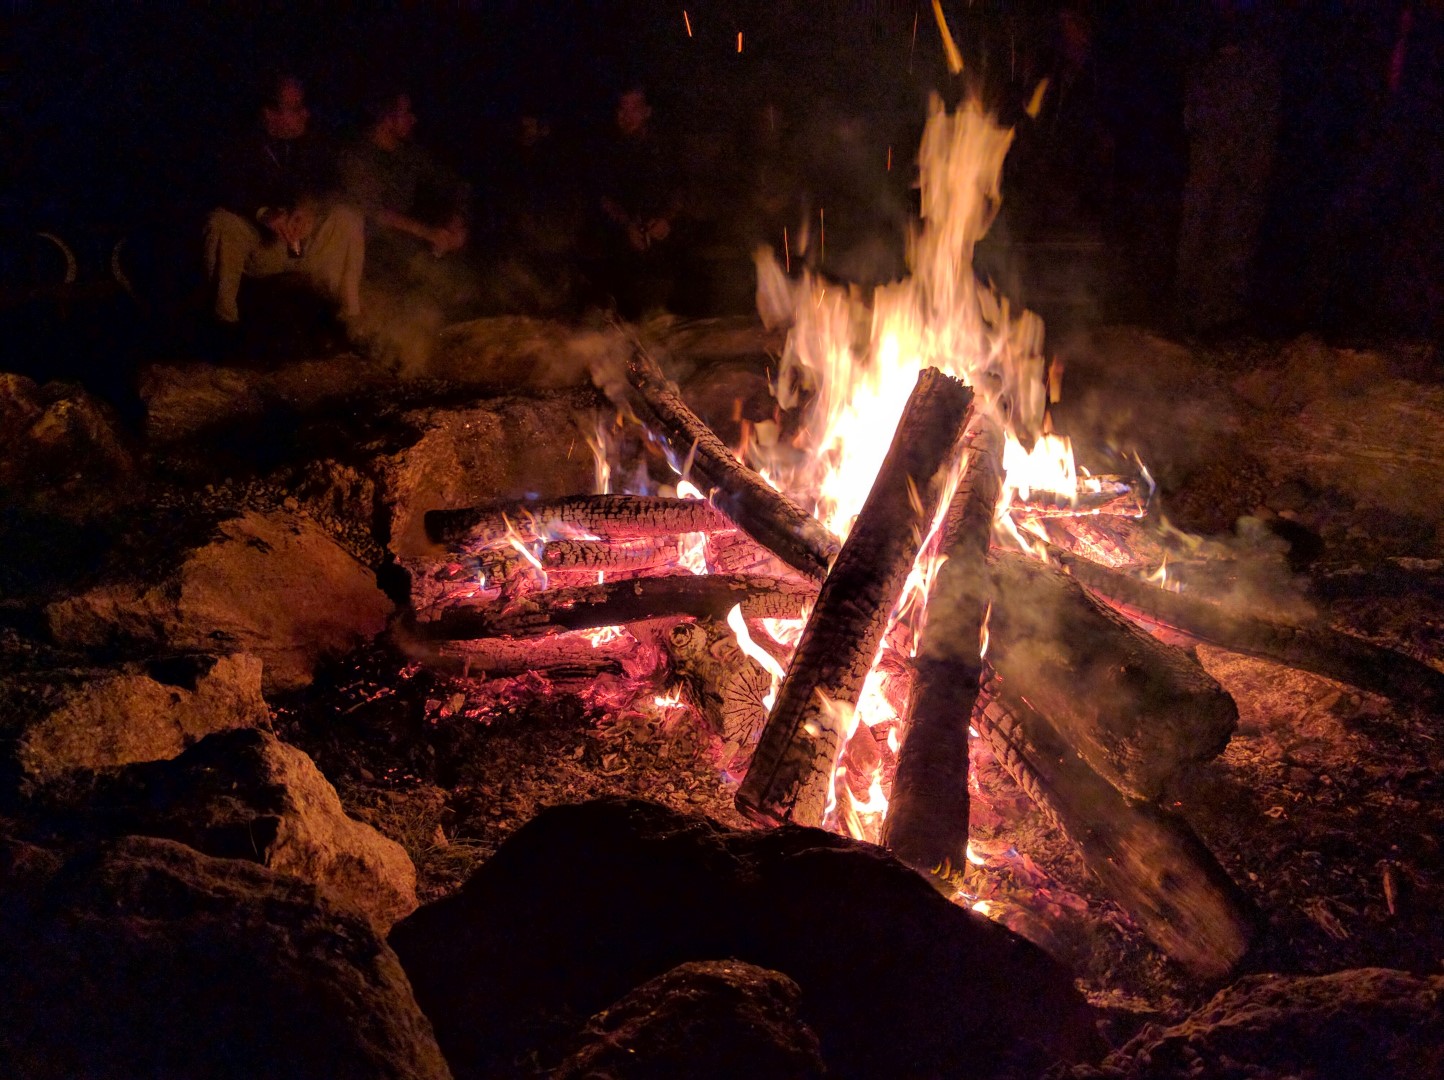 Post-trail bonfire